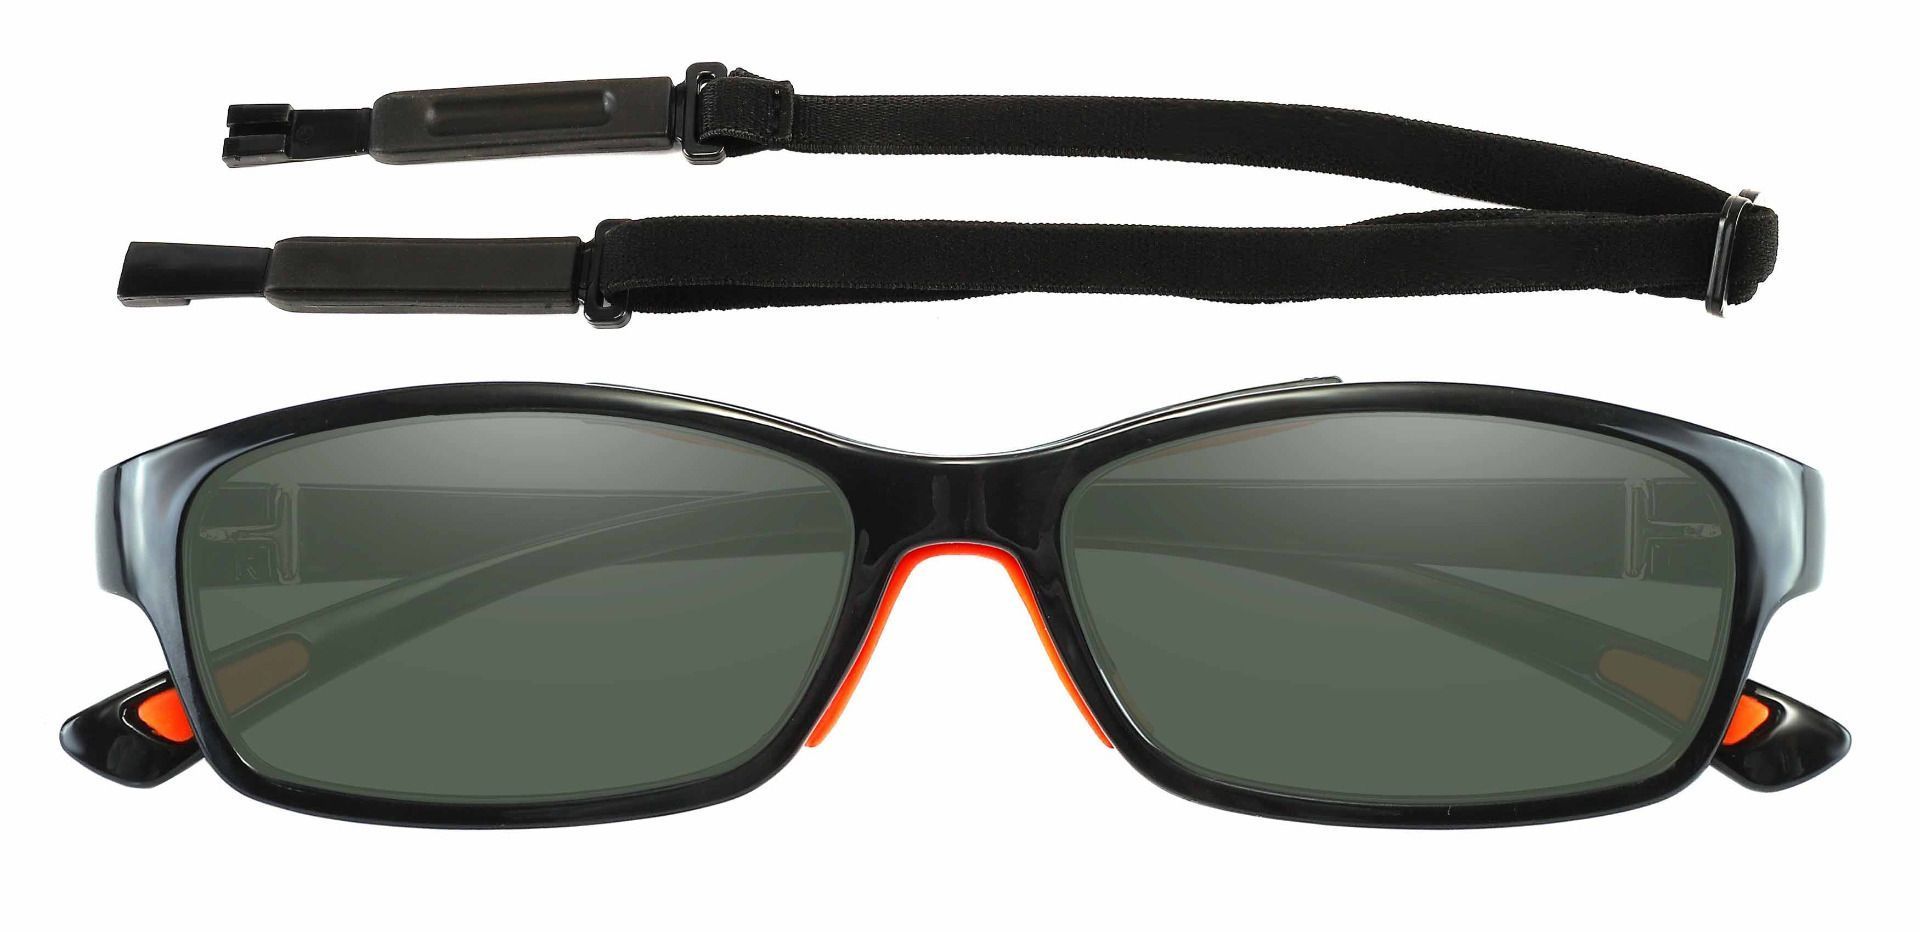 Glynn Rectangle Lined Bifocal Sunglasses - Black Frame With Green Lenses